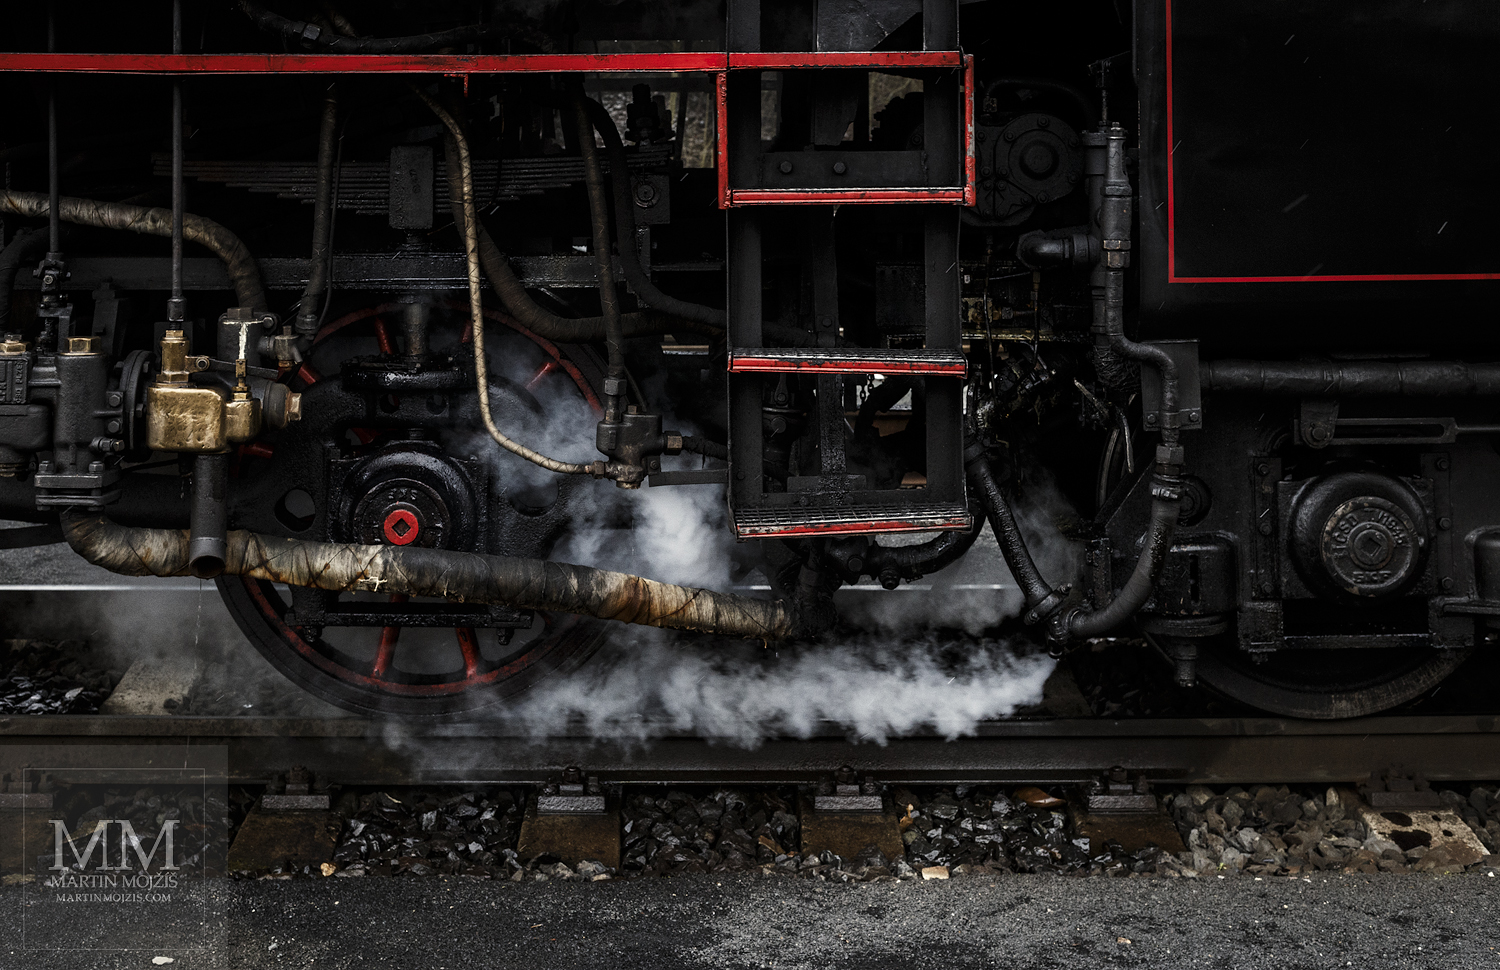 Fine Art photograph of the steam locomotive 475.179 Noblewoman. Martin Mojzis.